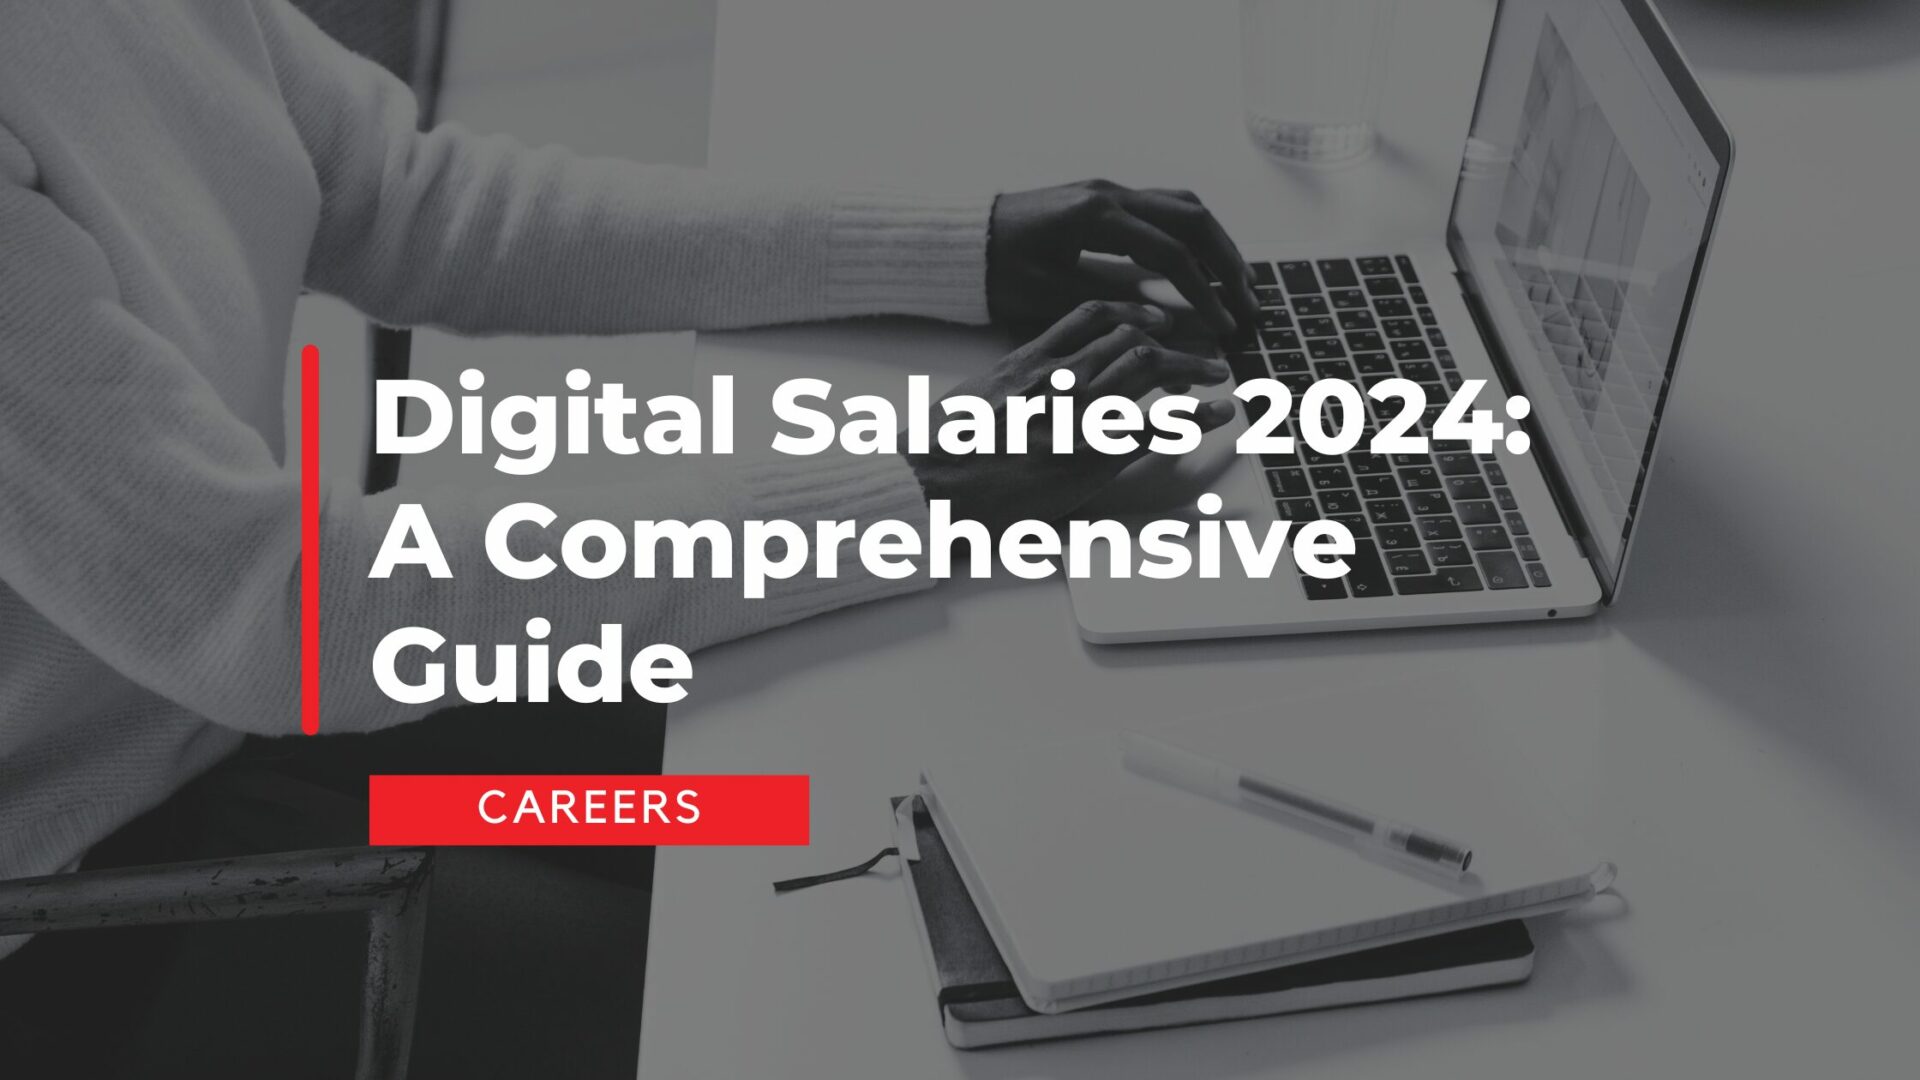 Digital Salaries 2024: A Comprehensive Guide